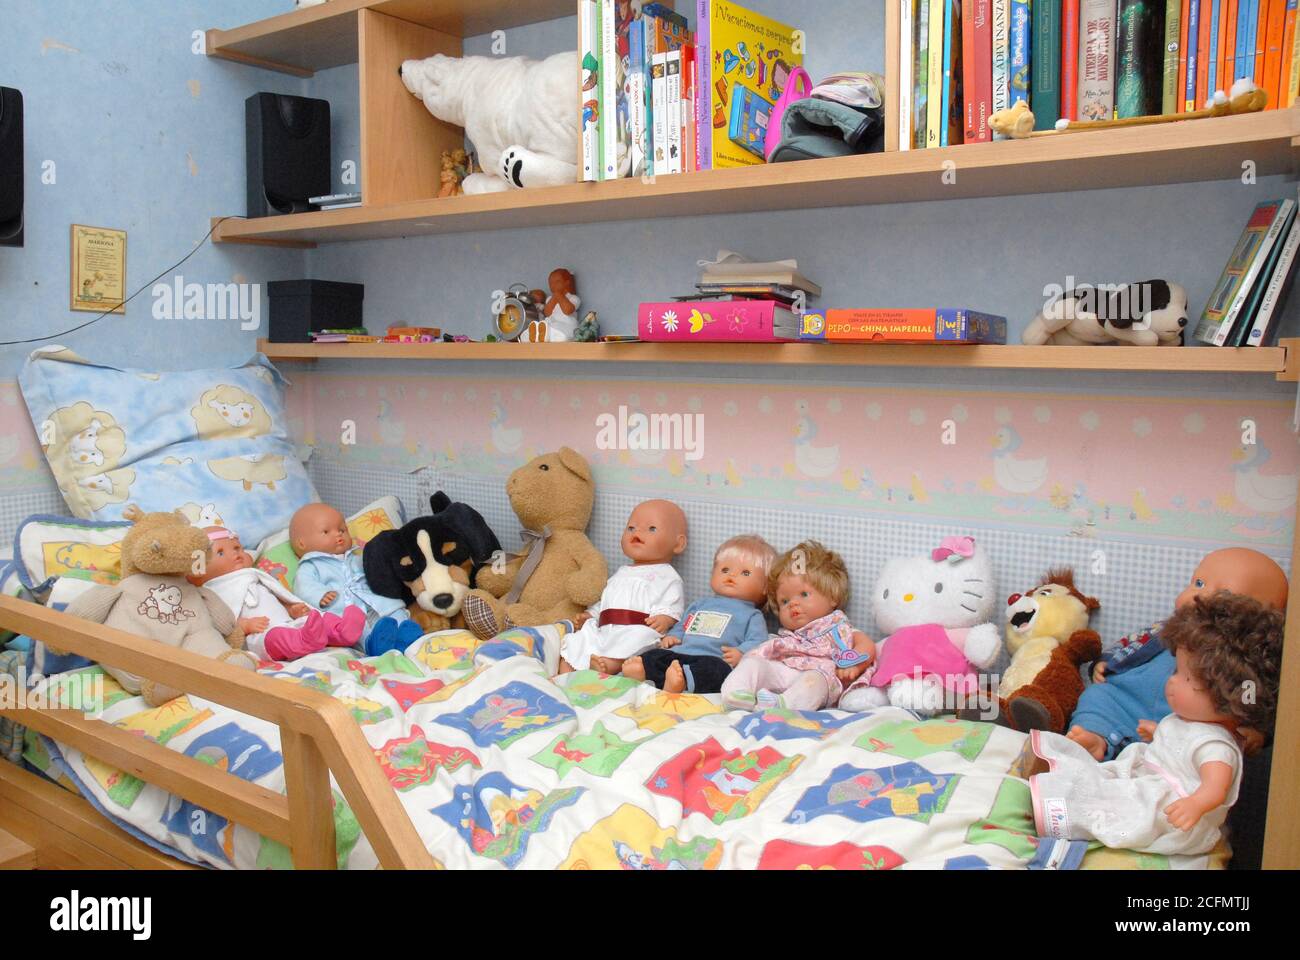 girl's room, dolls, dolls, toys, books, bed, loft bed, stuffed animals, children's room Stock Photo